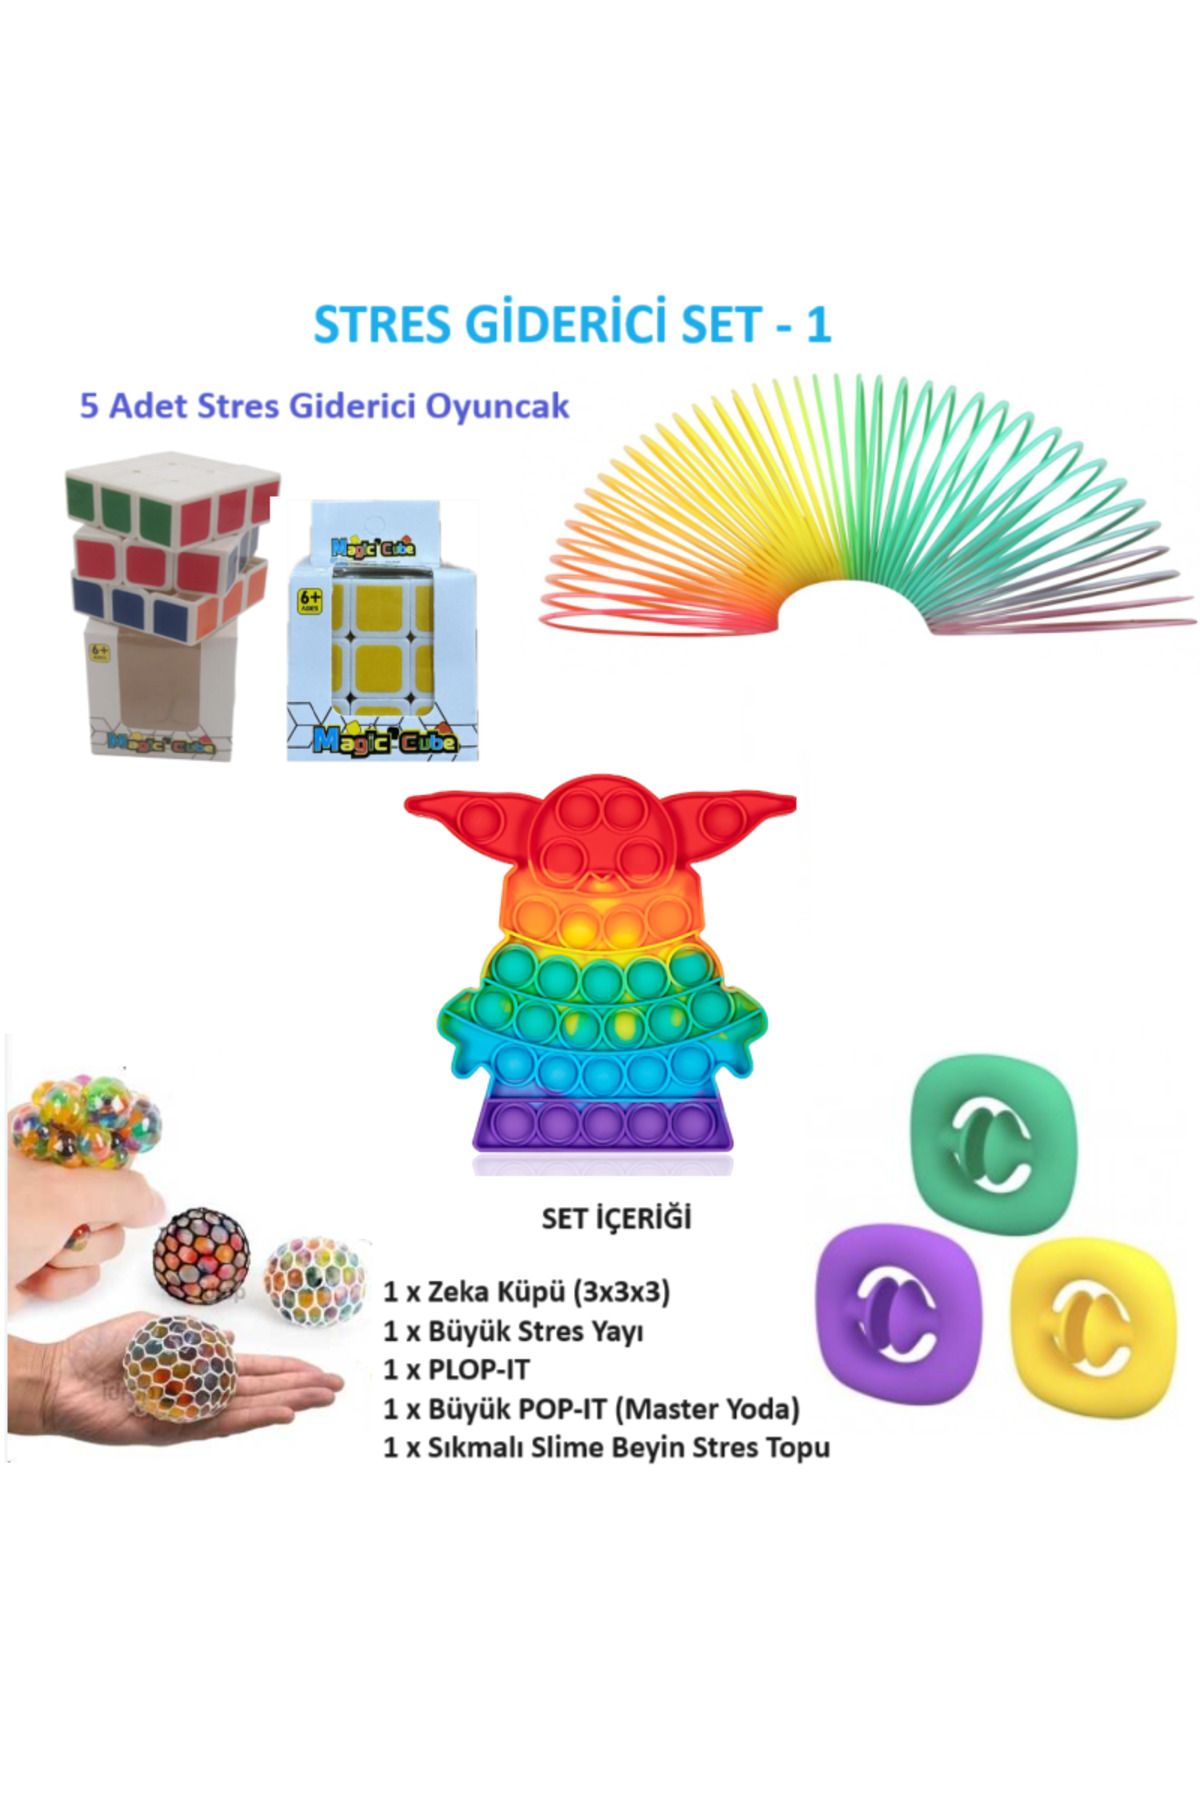 ZETCONCEPT Stres Giderici Set-1-  1 Popit, 1 Plop-it, 1 Zeka Küpü, 1 Stres Yayı, 1 Slime Beyin Topu